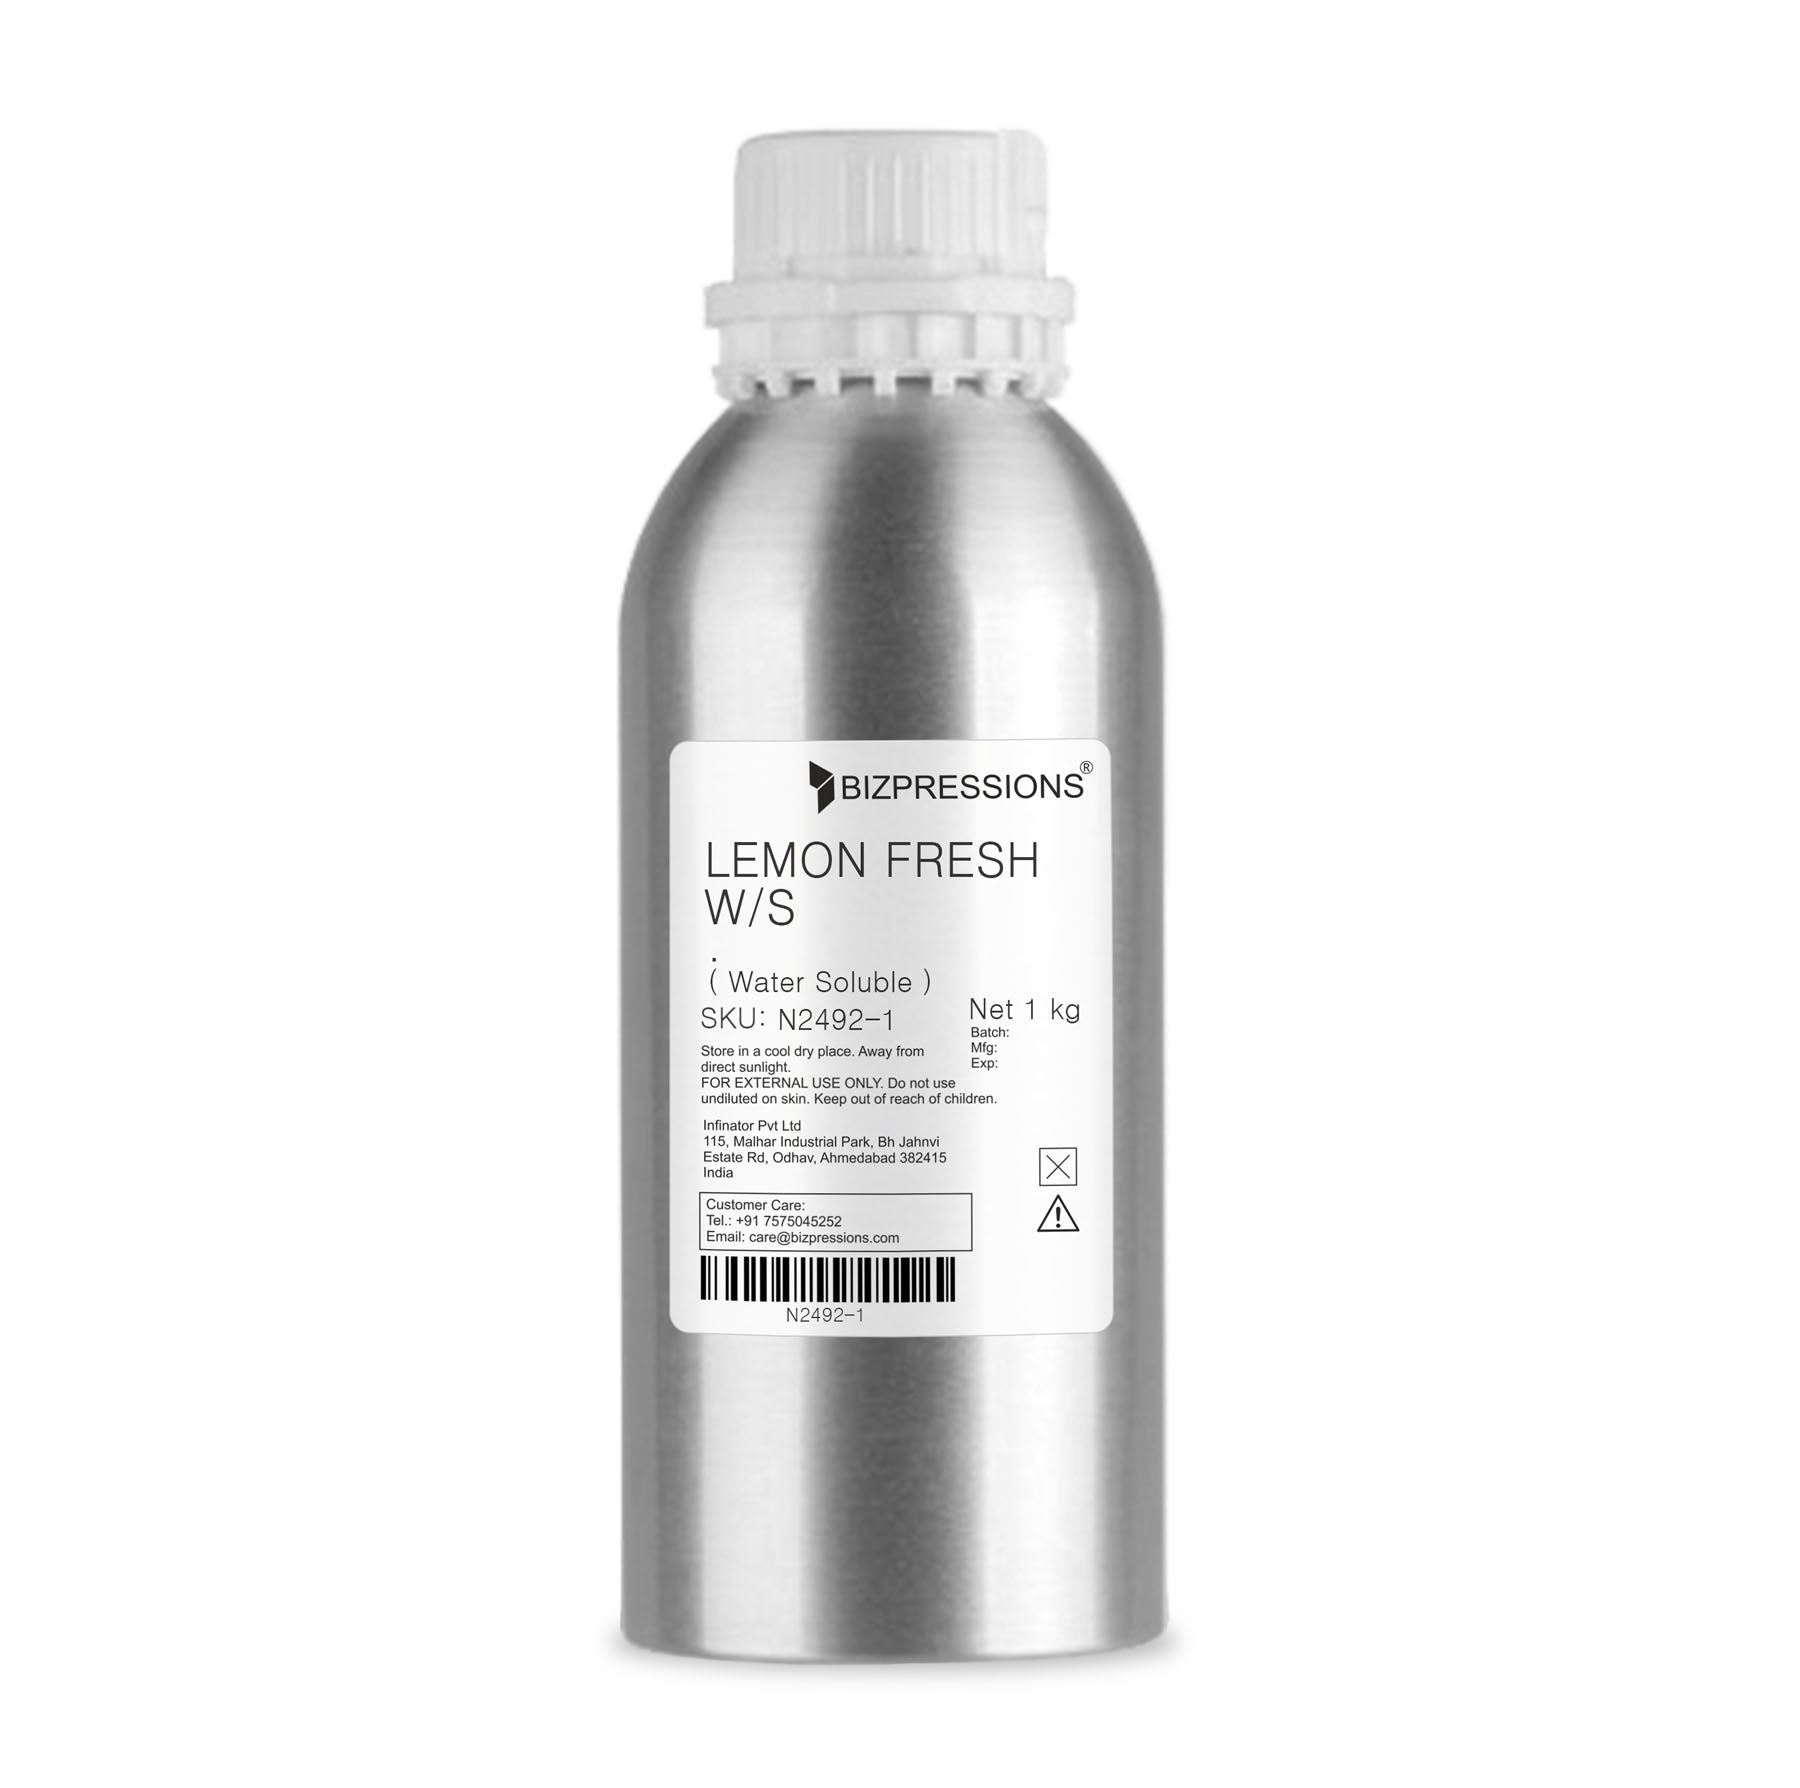 LEMON FRESH W/S - Fragrance ( Water Soluble ) - 1 kg